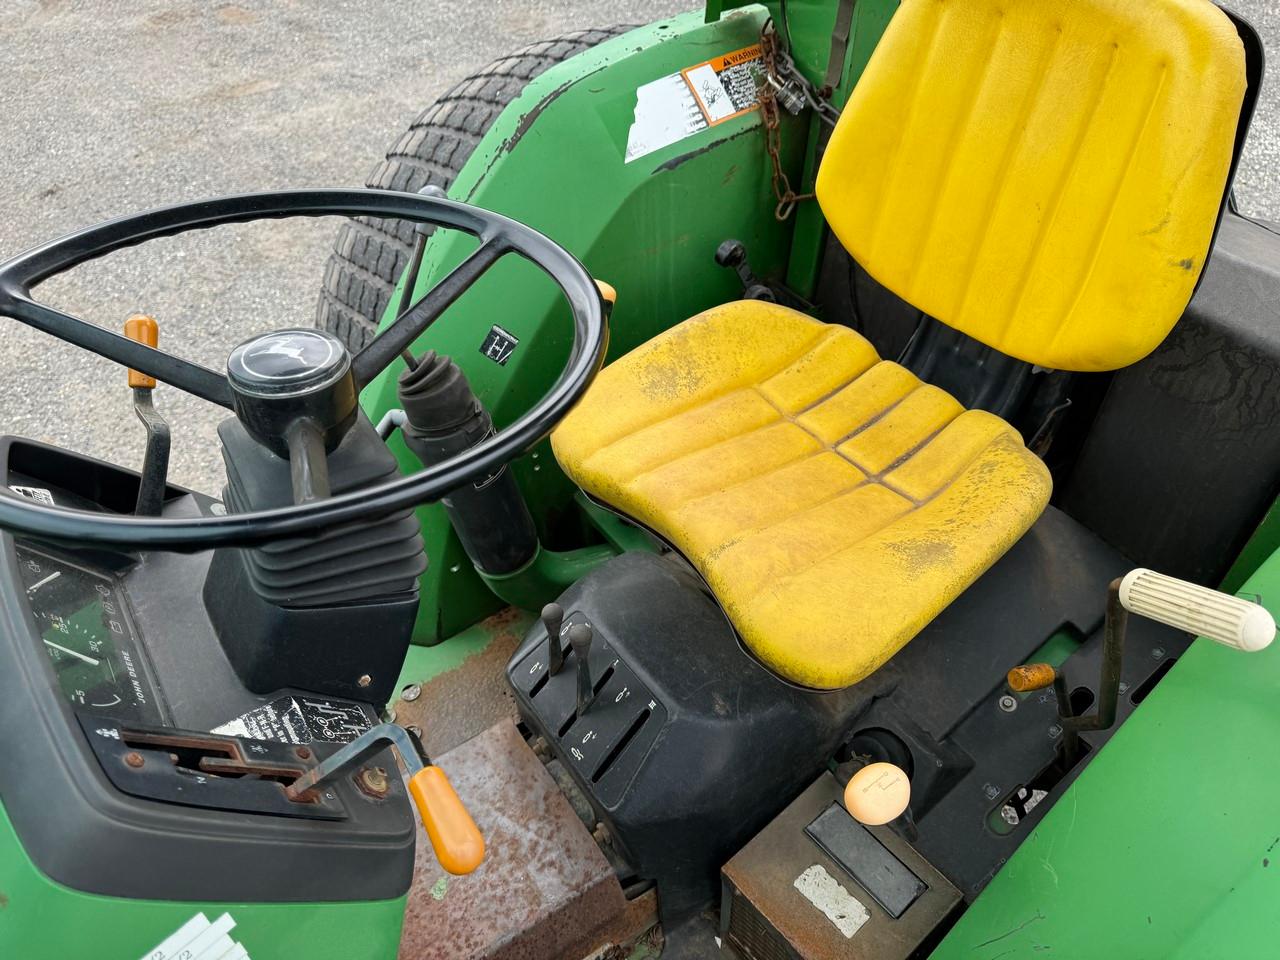 John Deere 5210 Tractor w/ Front Loader Attatchment